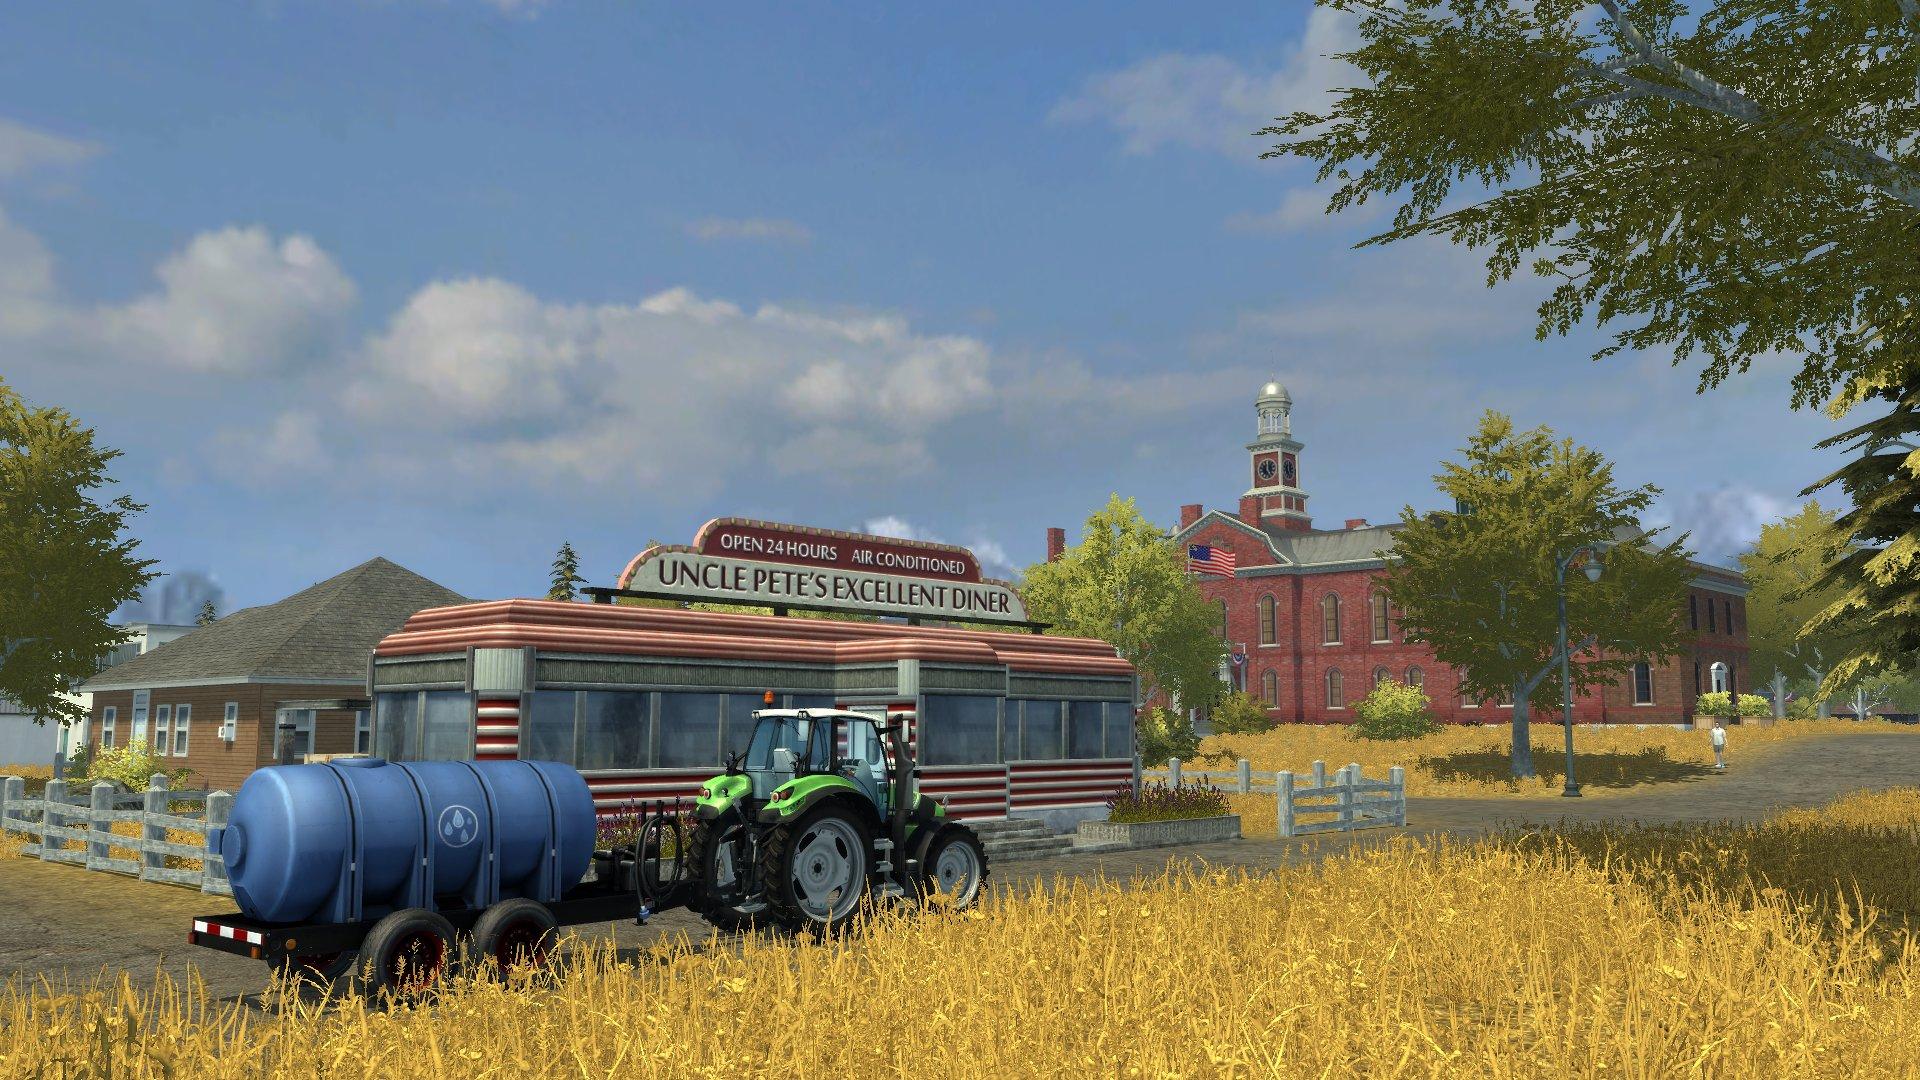 Farming Simulator 20 on the App Store